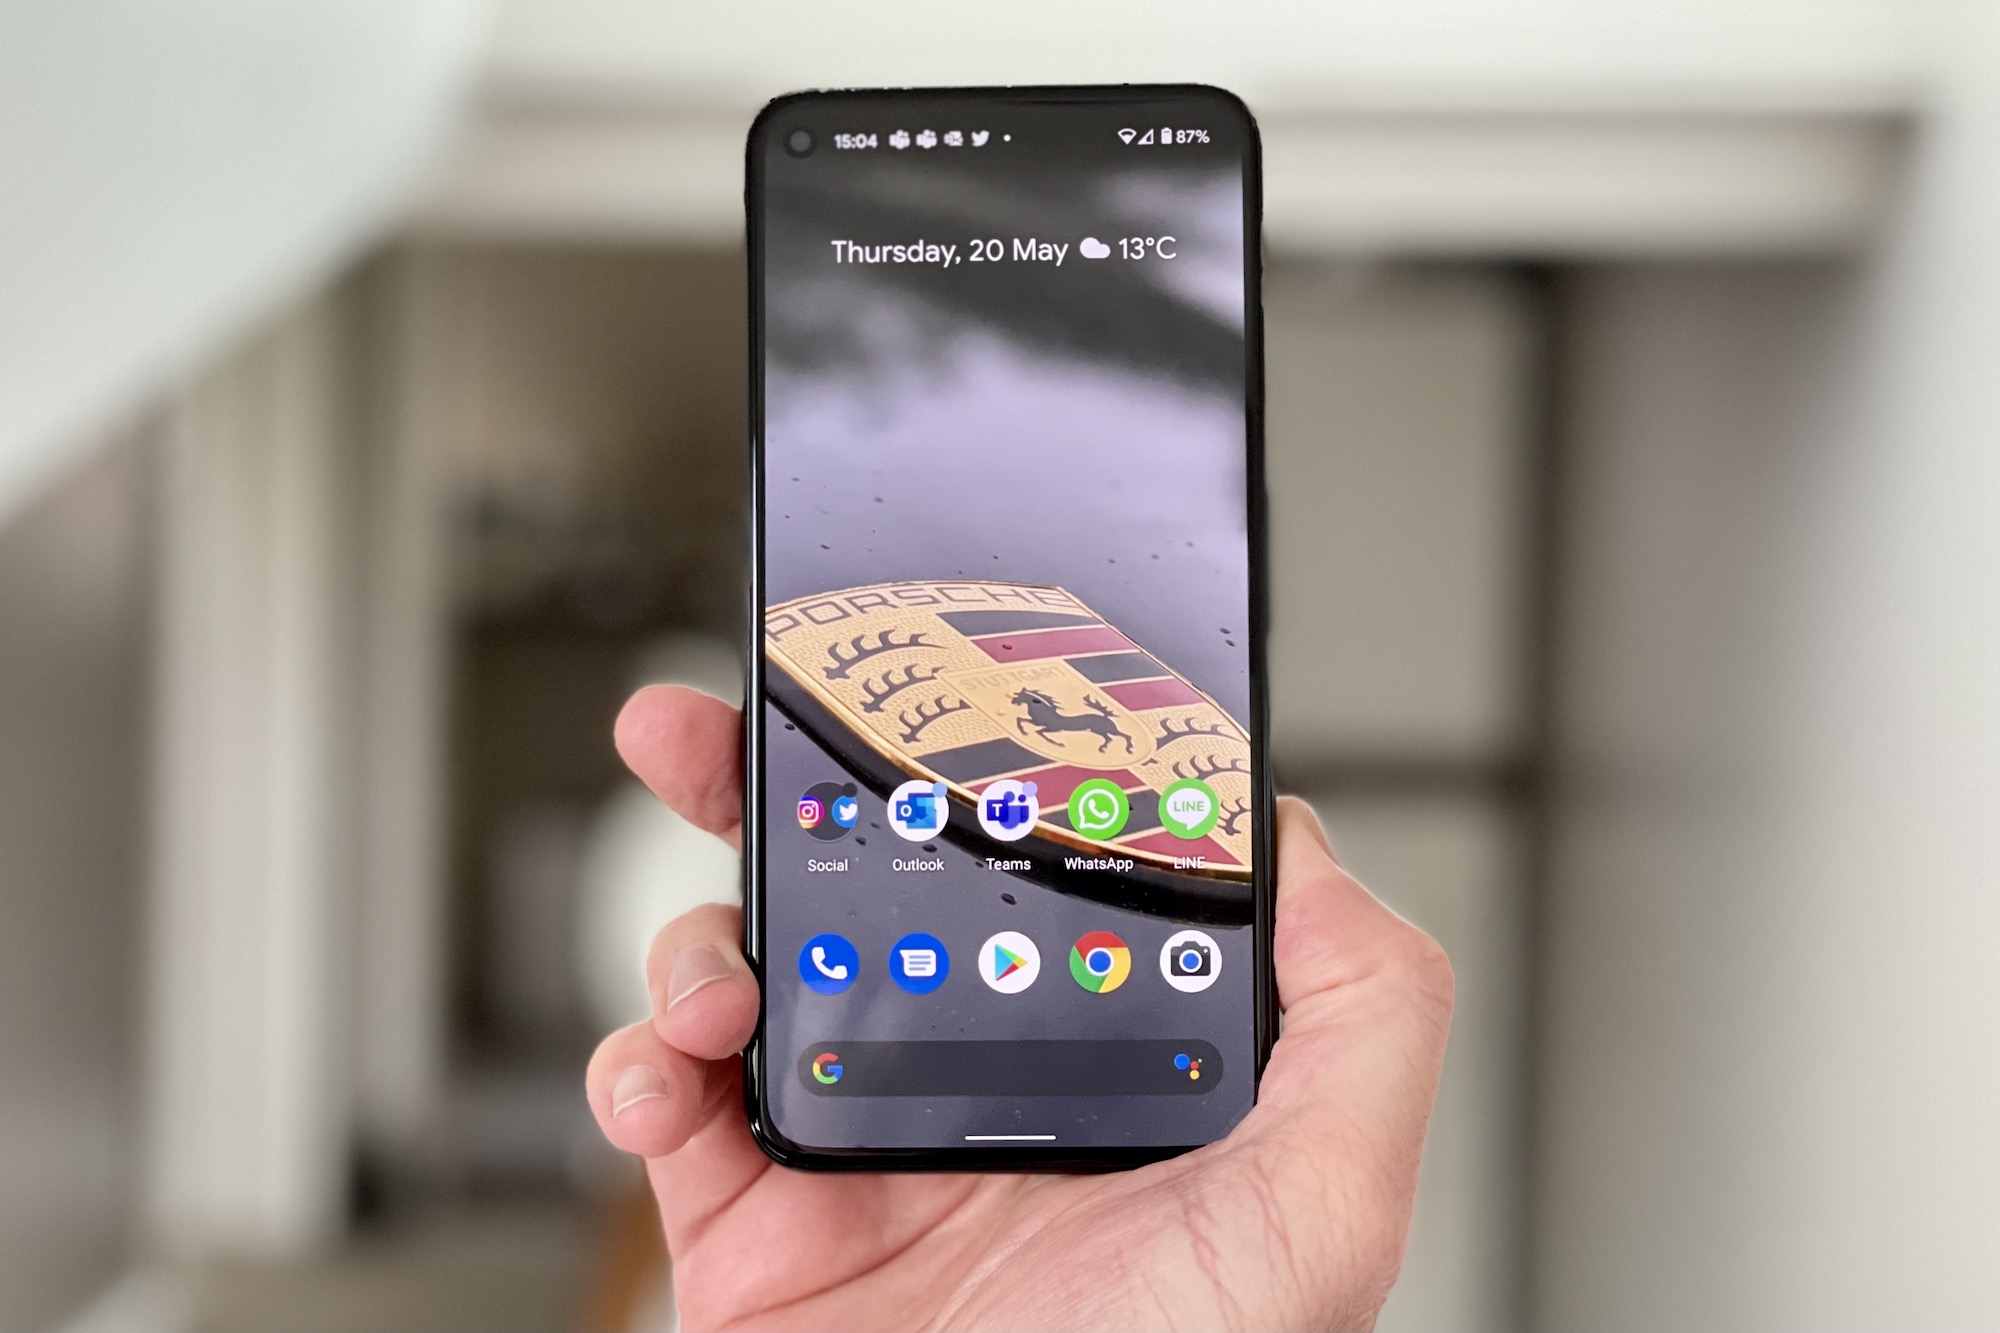 Google Pixel 5 Mobile Phone, Smartphone Google Pixel 5